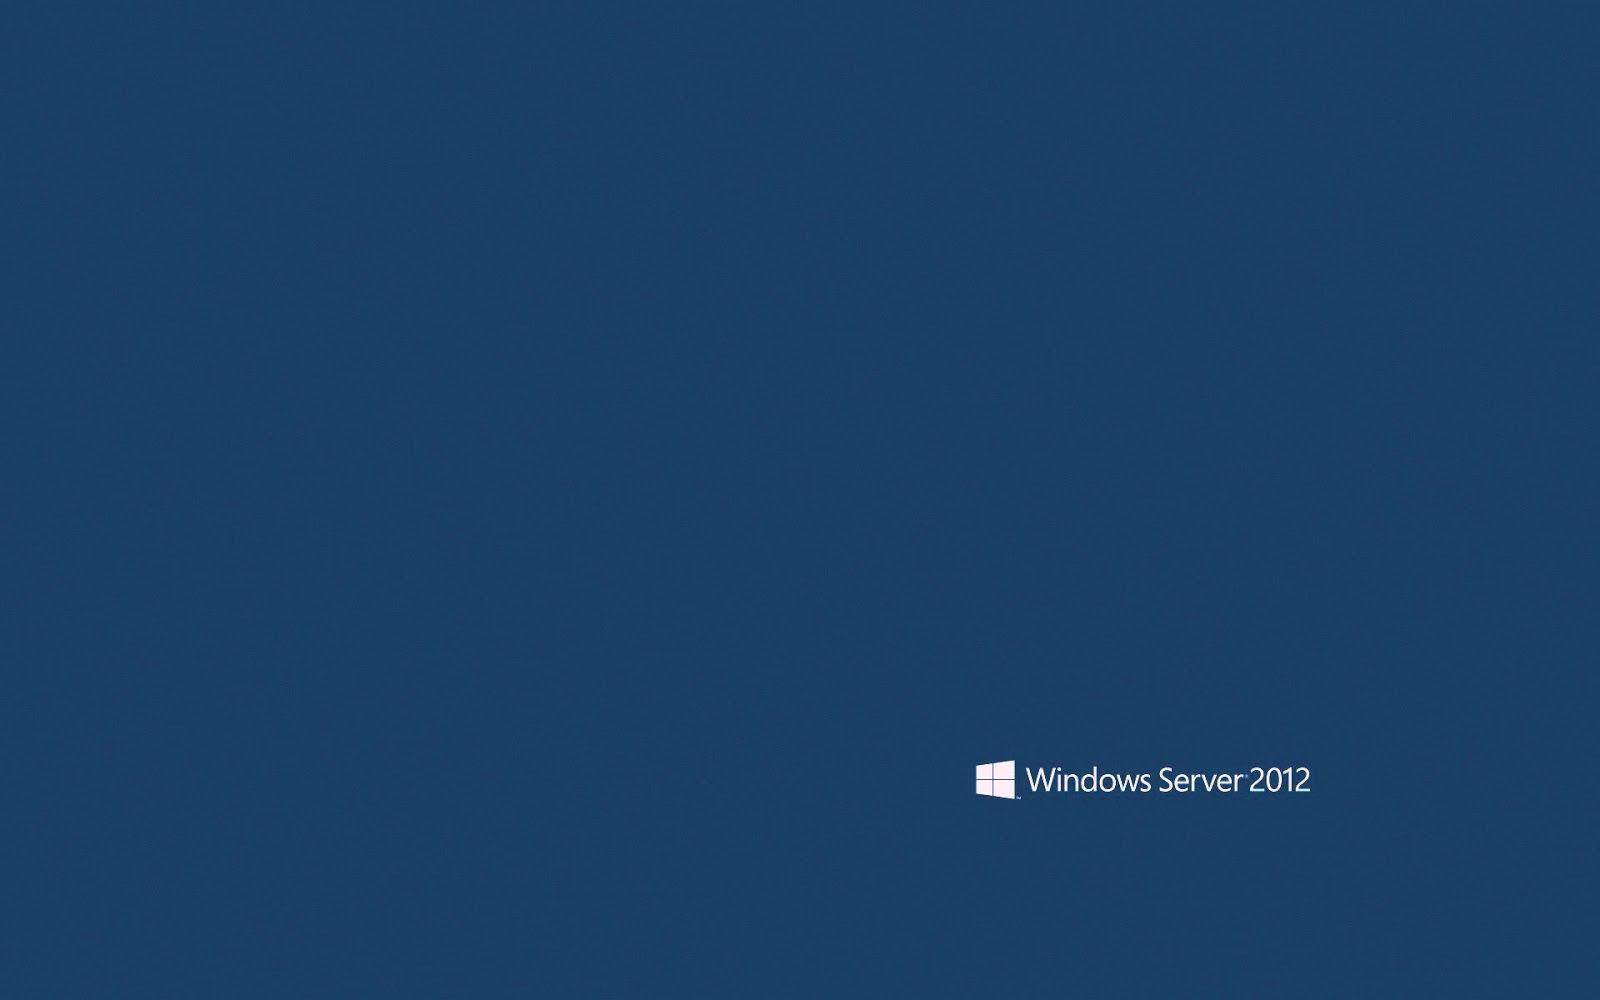 Windows Server 2012 Wallpaper Collection. Windows Server 2012